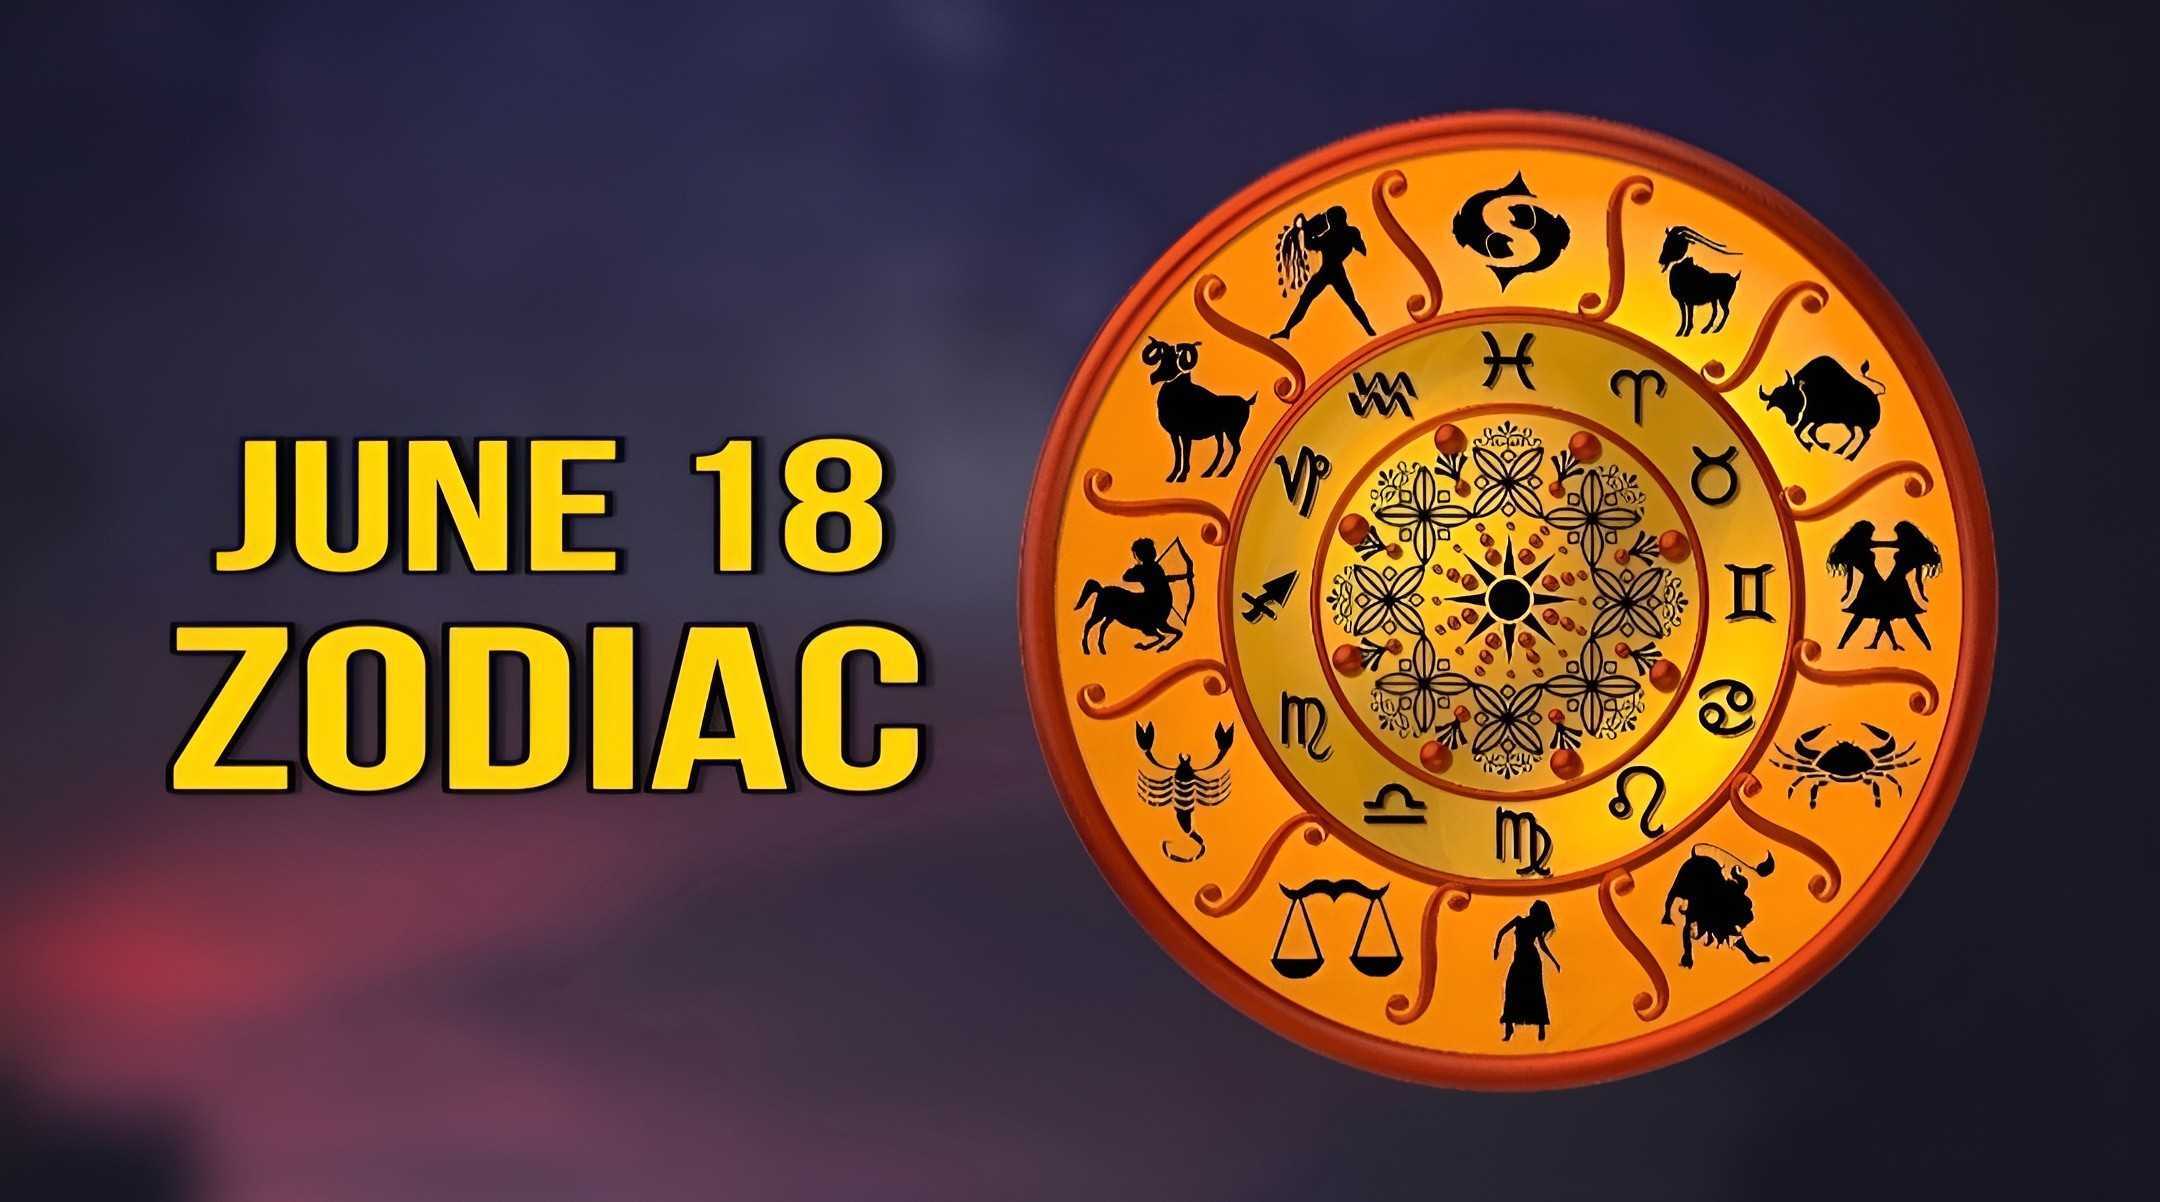 June 18 Zodiac